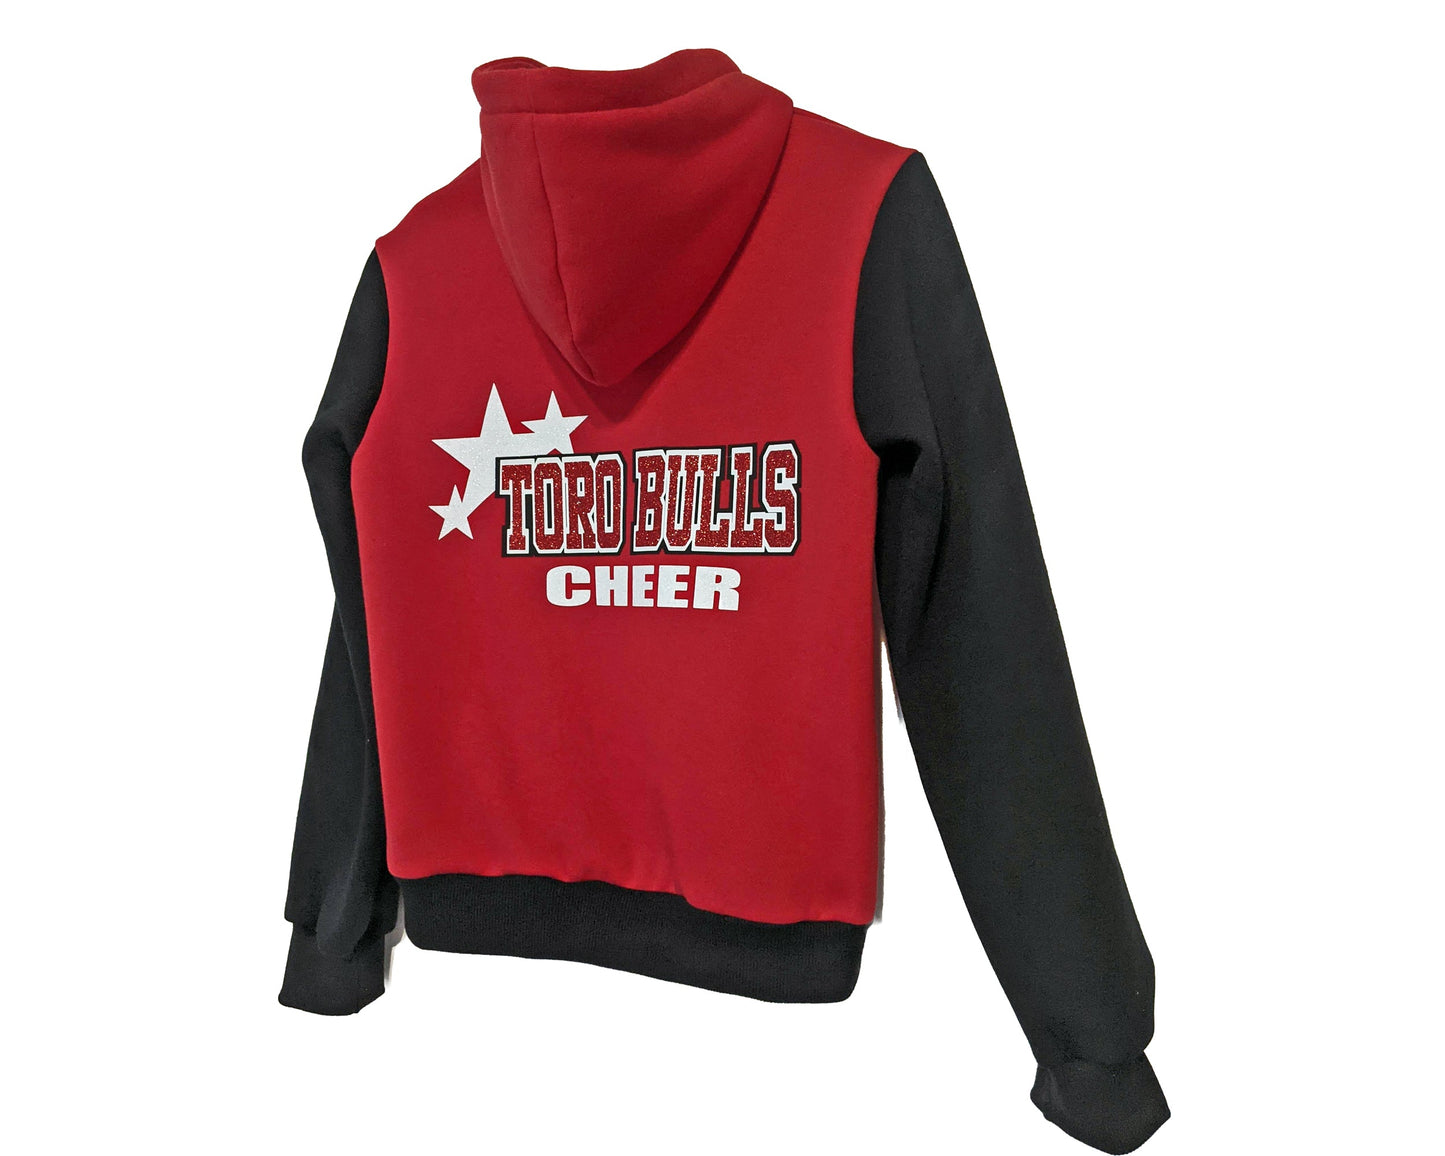 Personalized cheerleader jacket